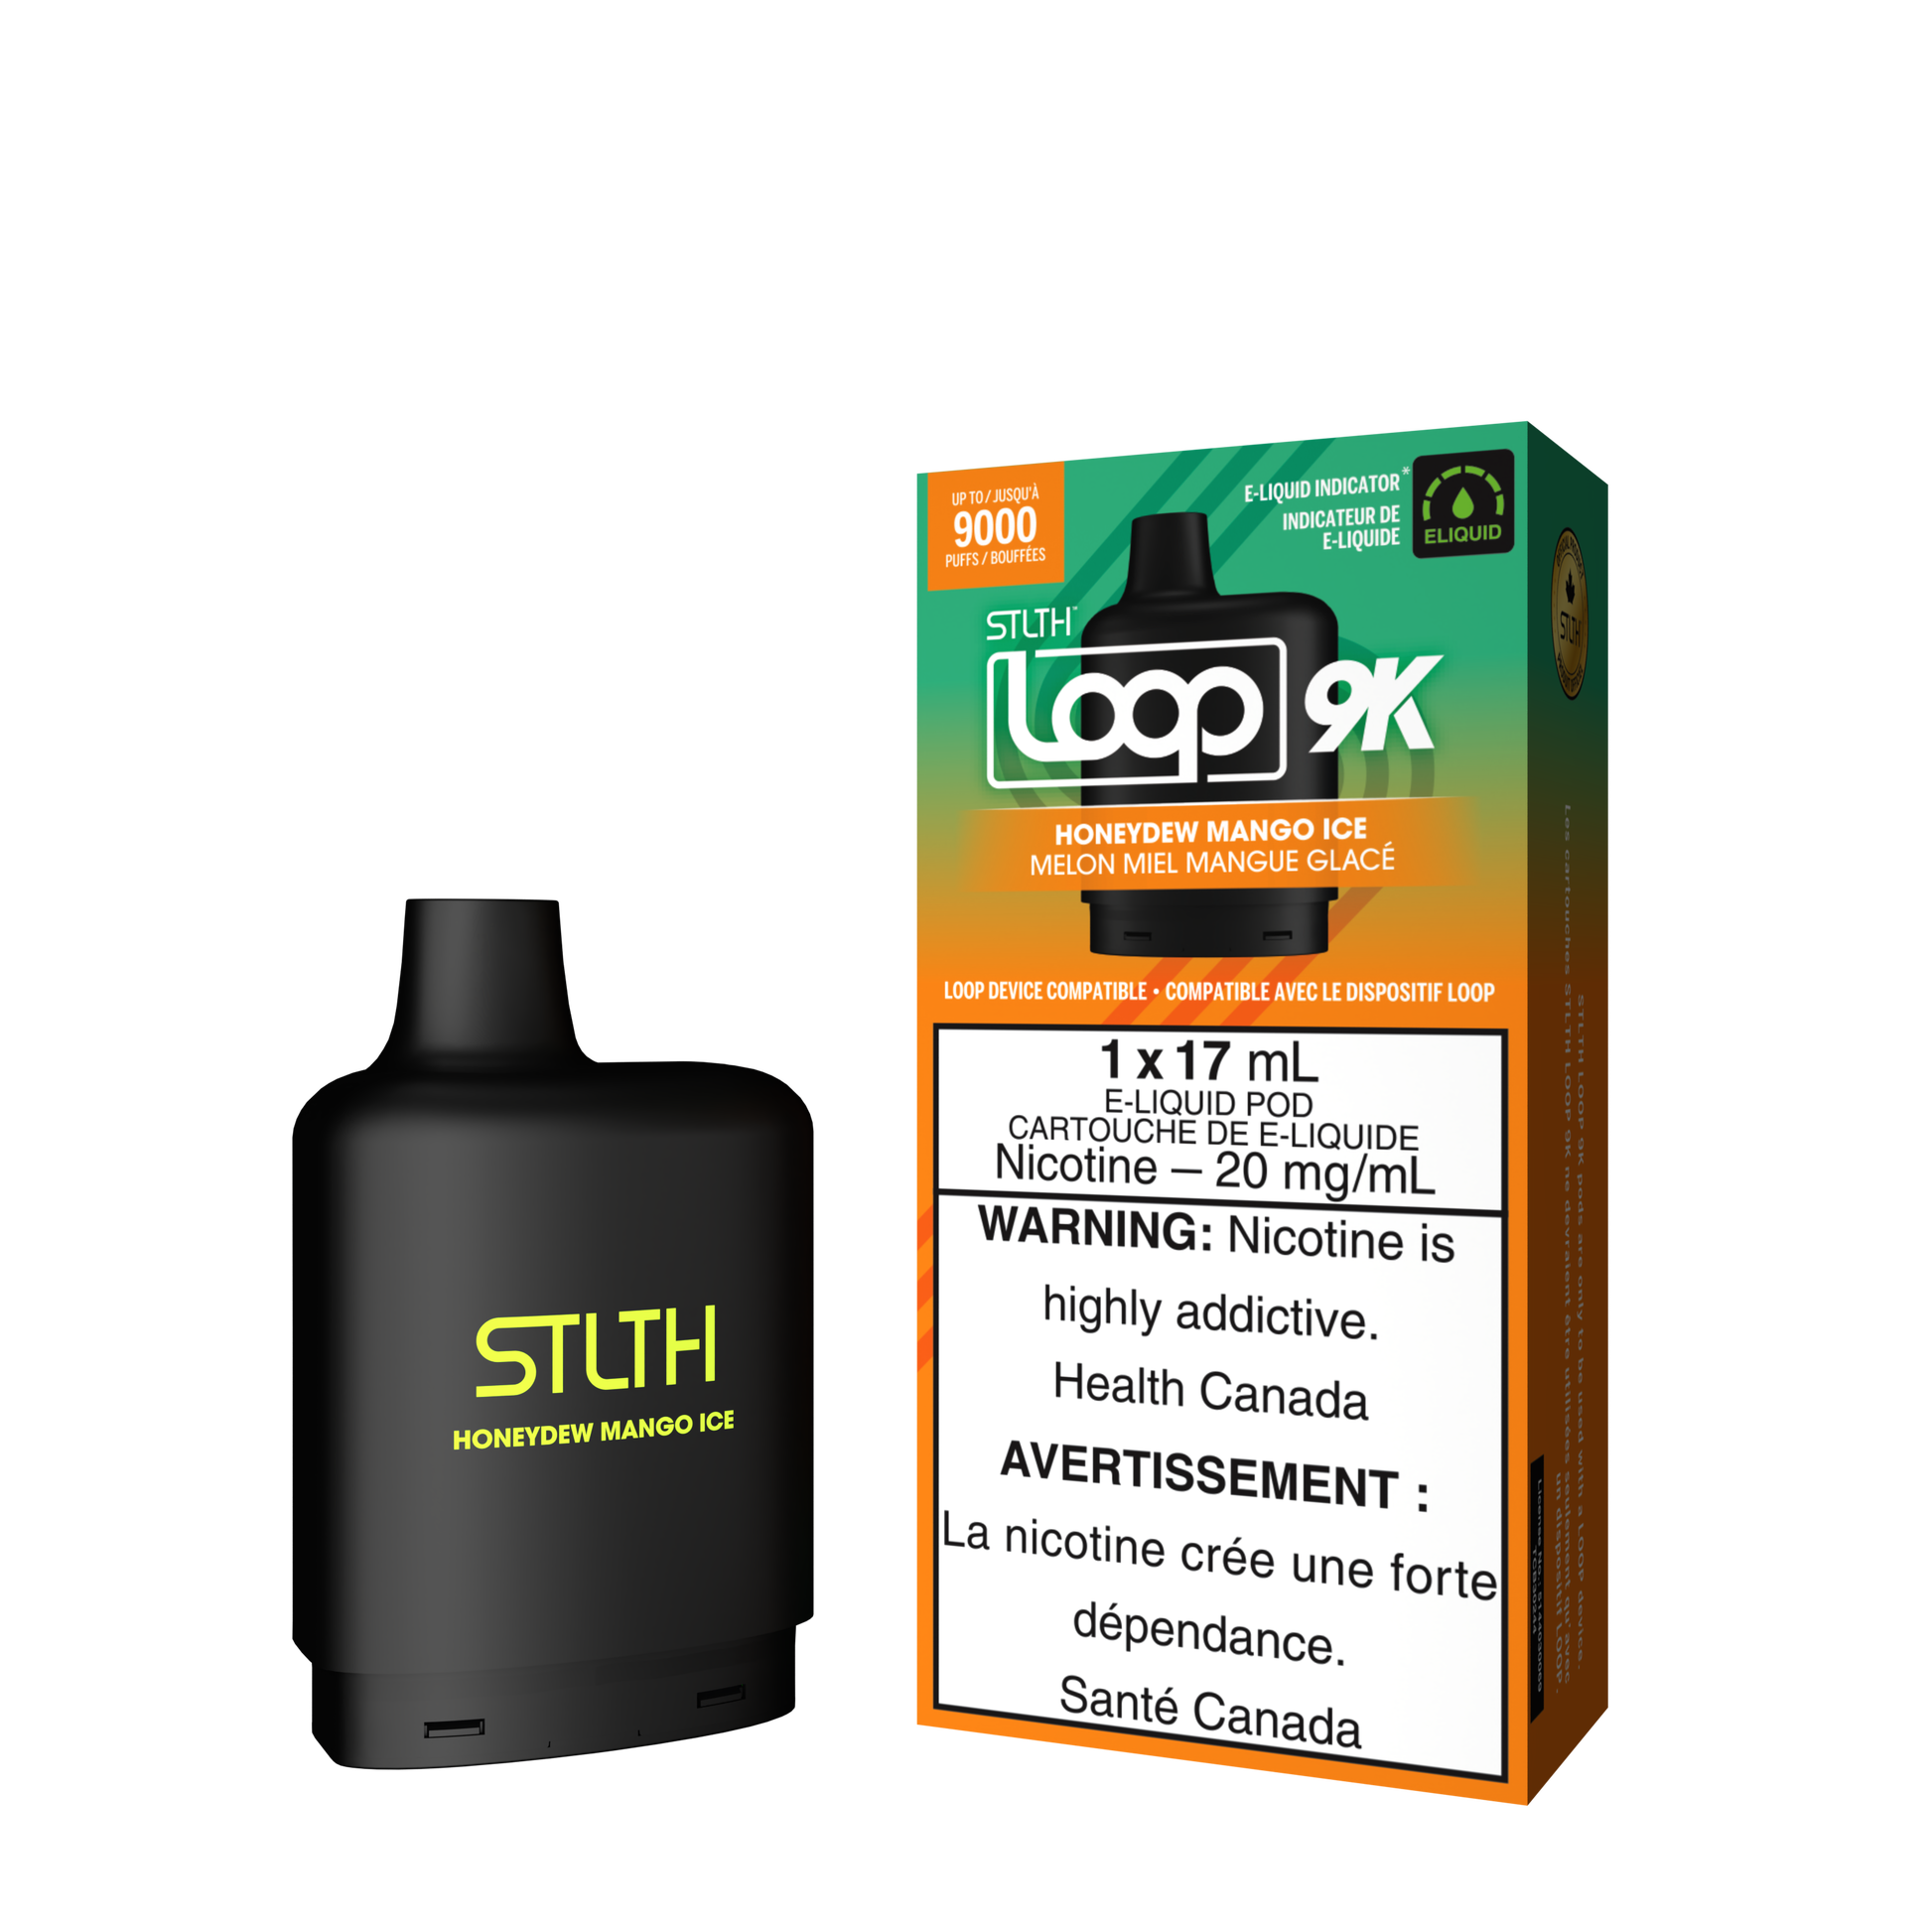 STLTH LOOP 9K Pod Pack - Honeydew Mango Ice